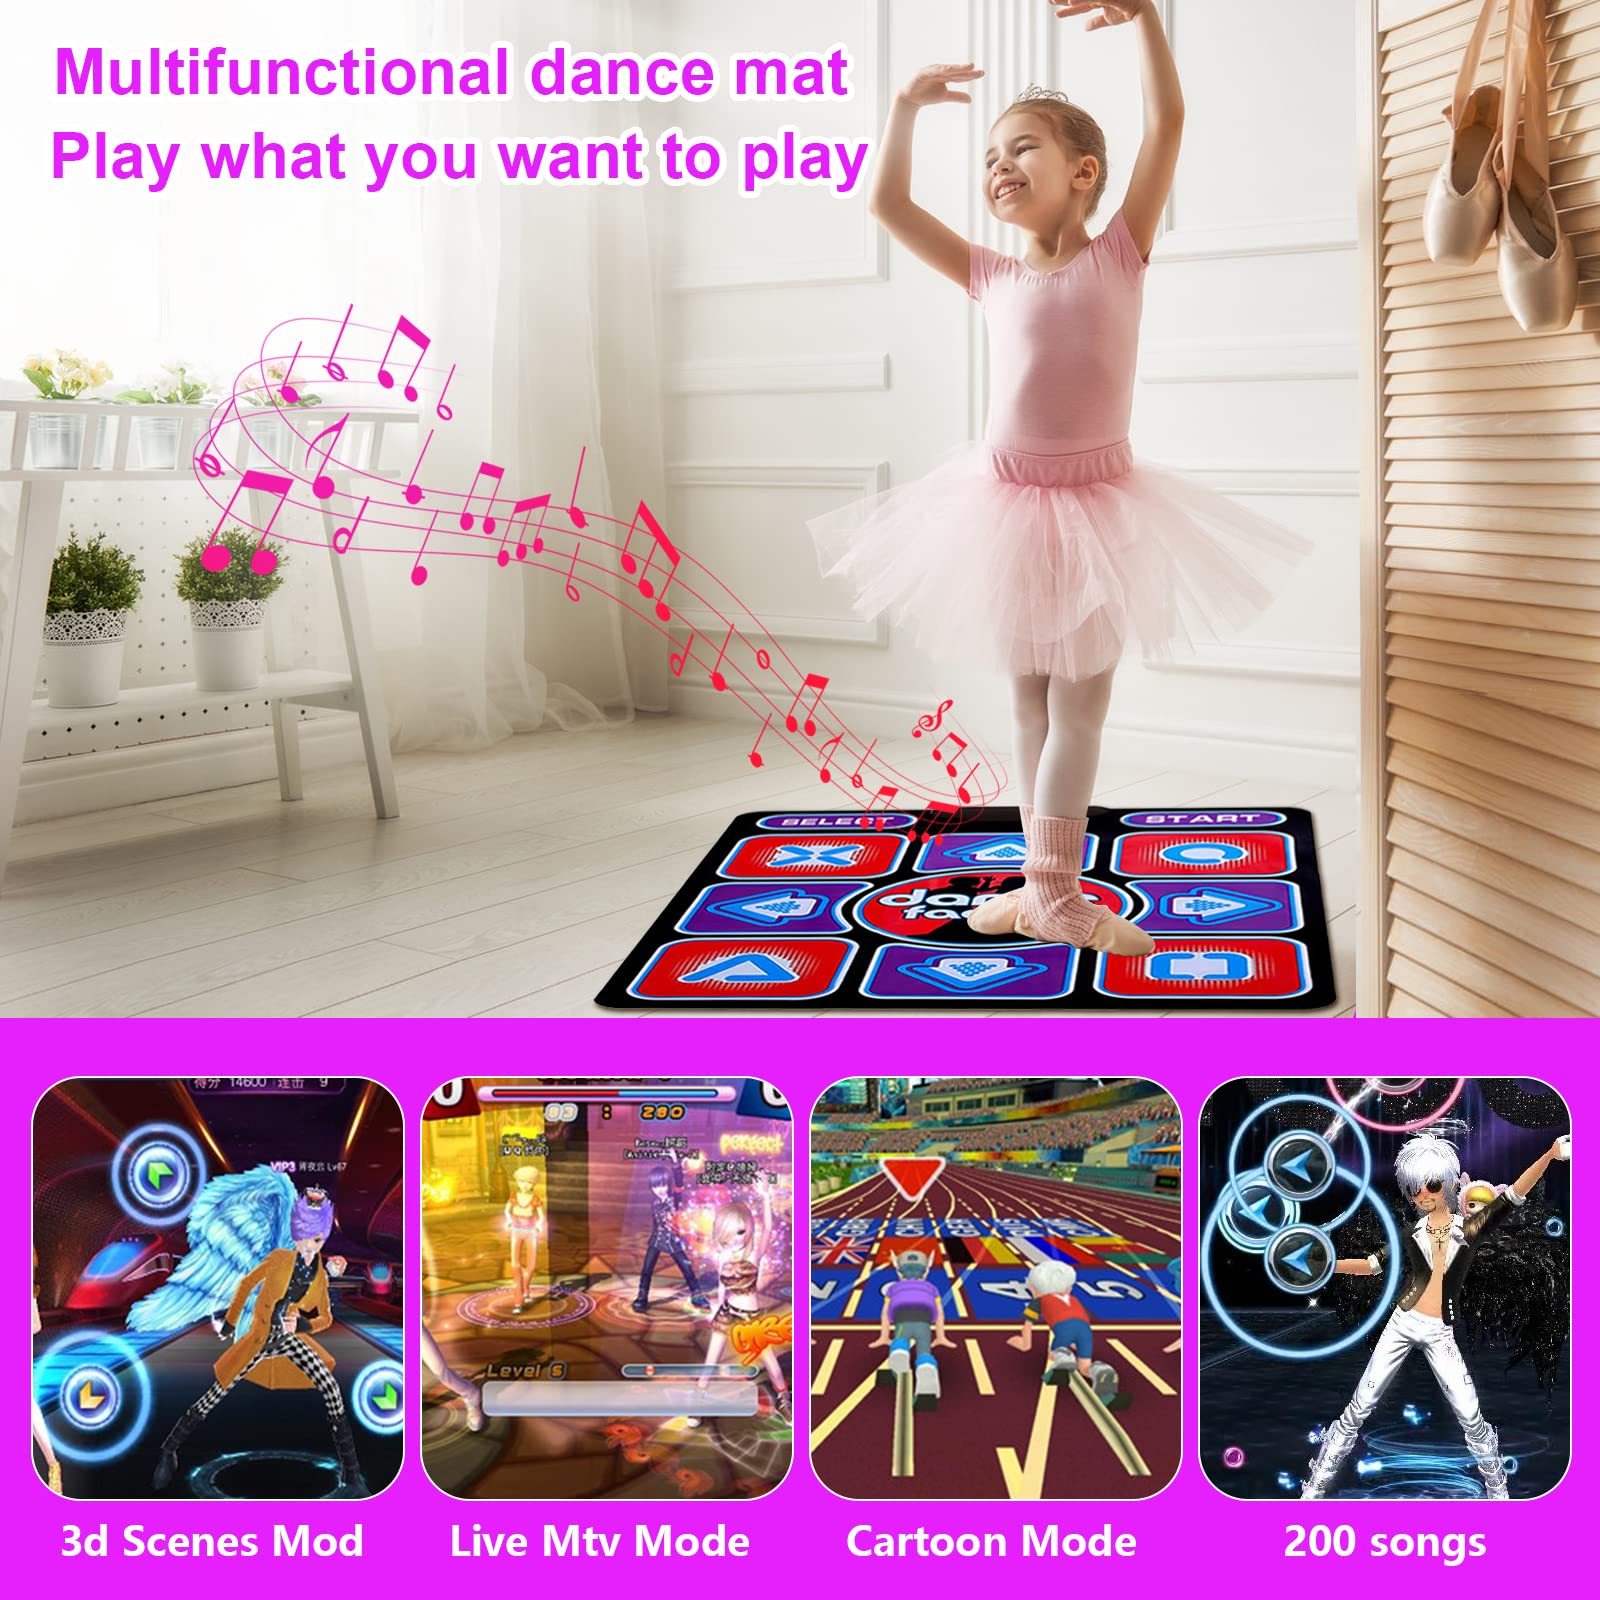 Dance Mat for Kids Adults,Musical Electronic Dance Mat,Yoga Fitness Dancing Step Floor Mat with 3D/Cartoon Mode,Non-Slip RCA Interface, 200 Songs & 68 Games